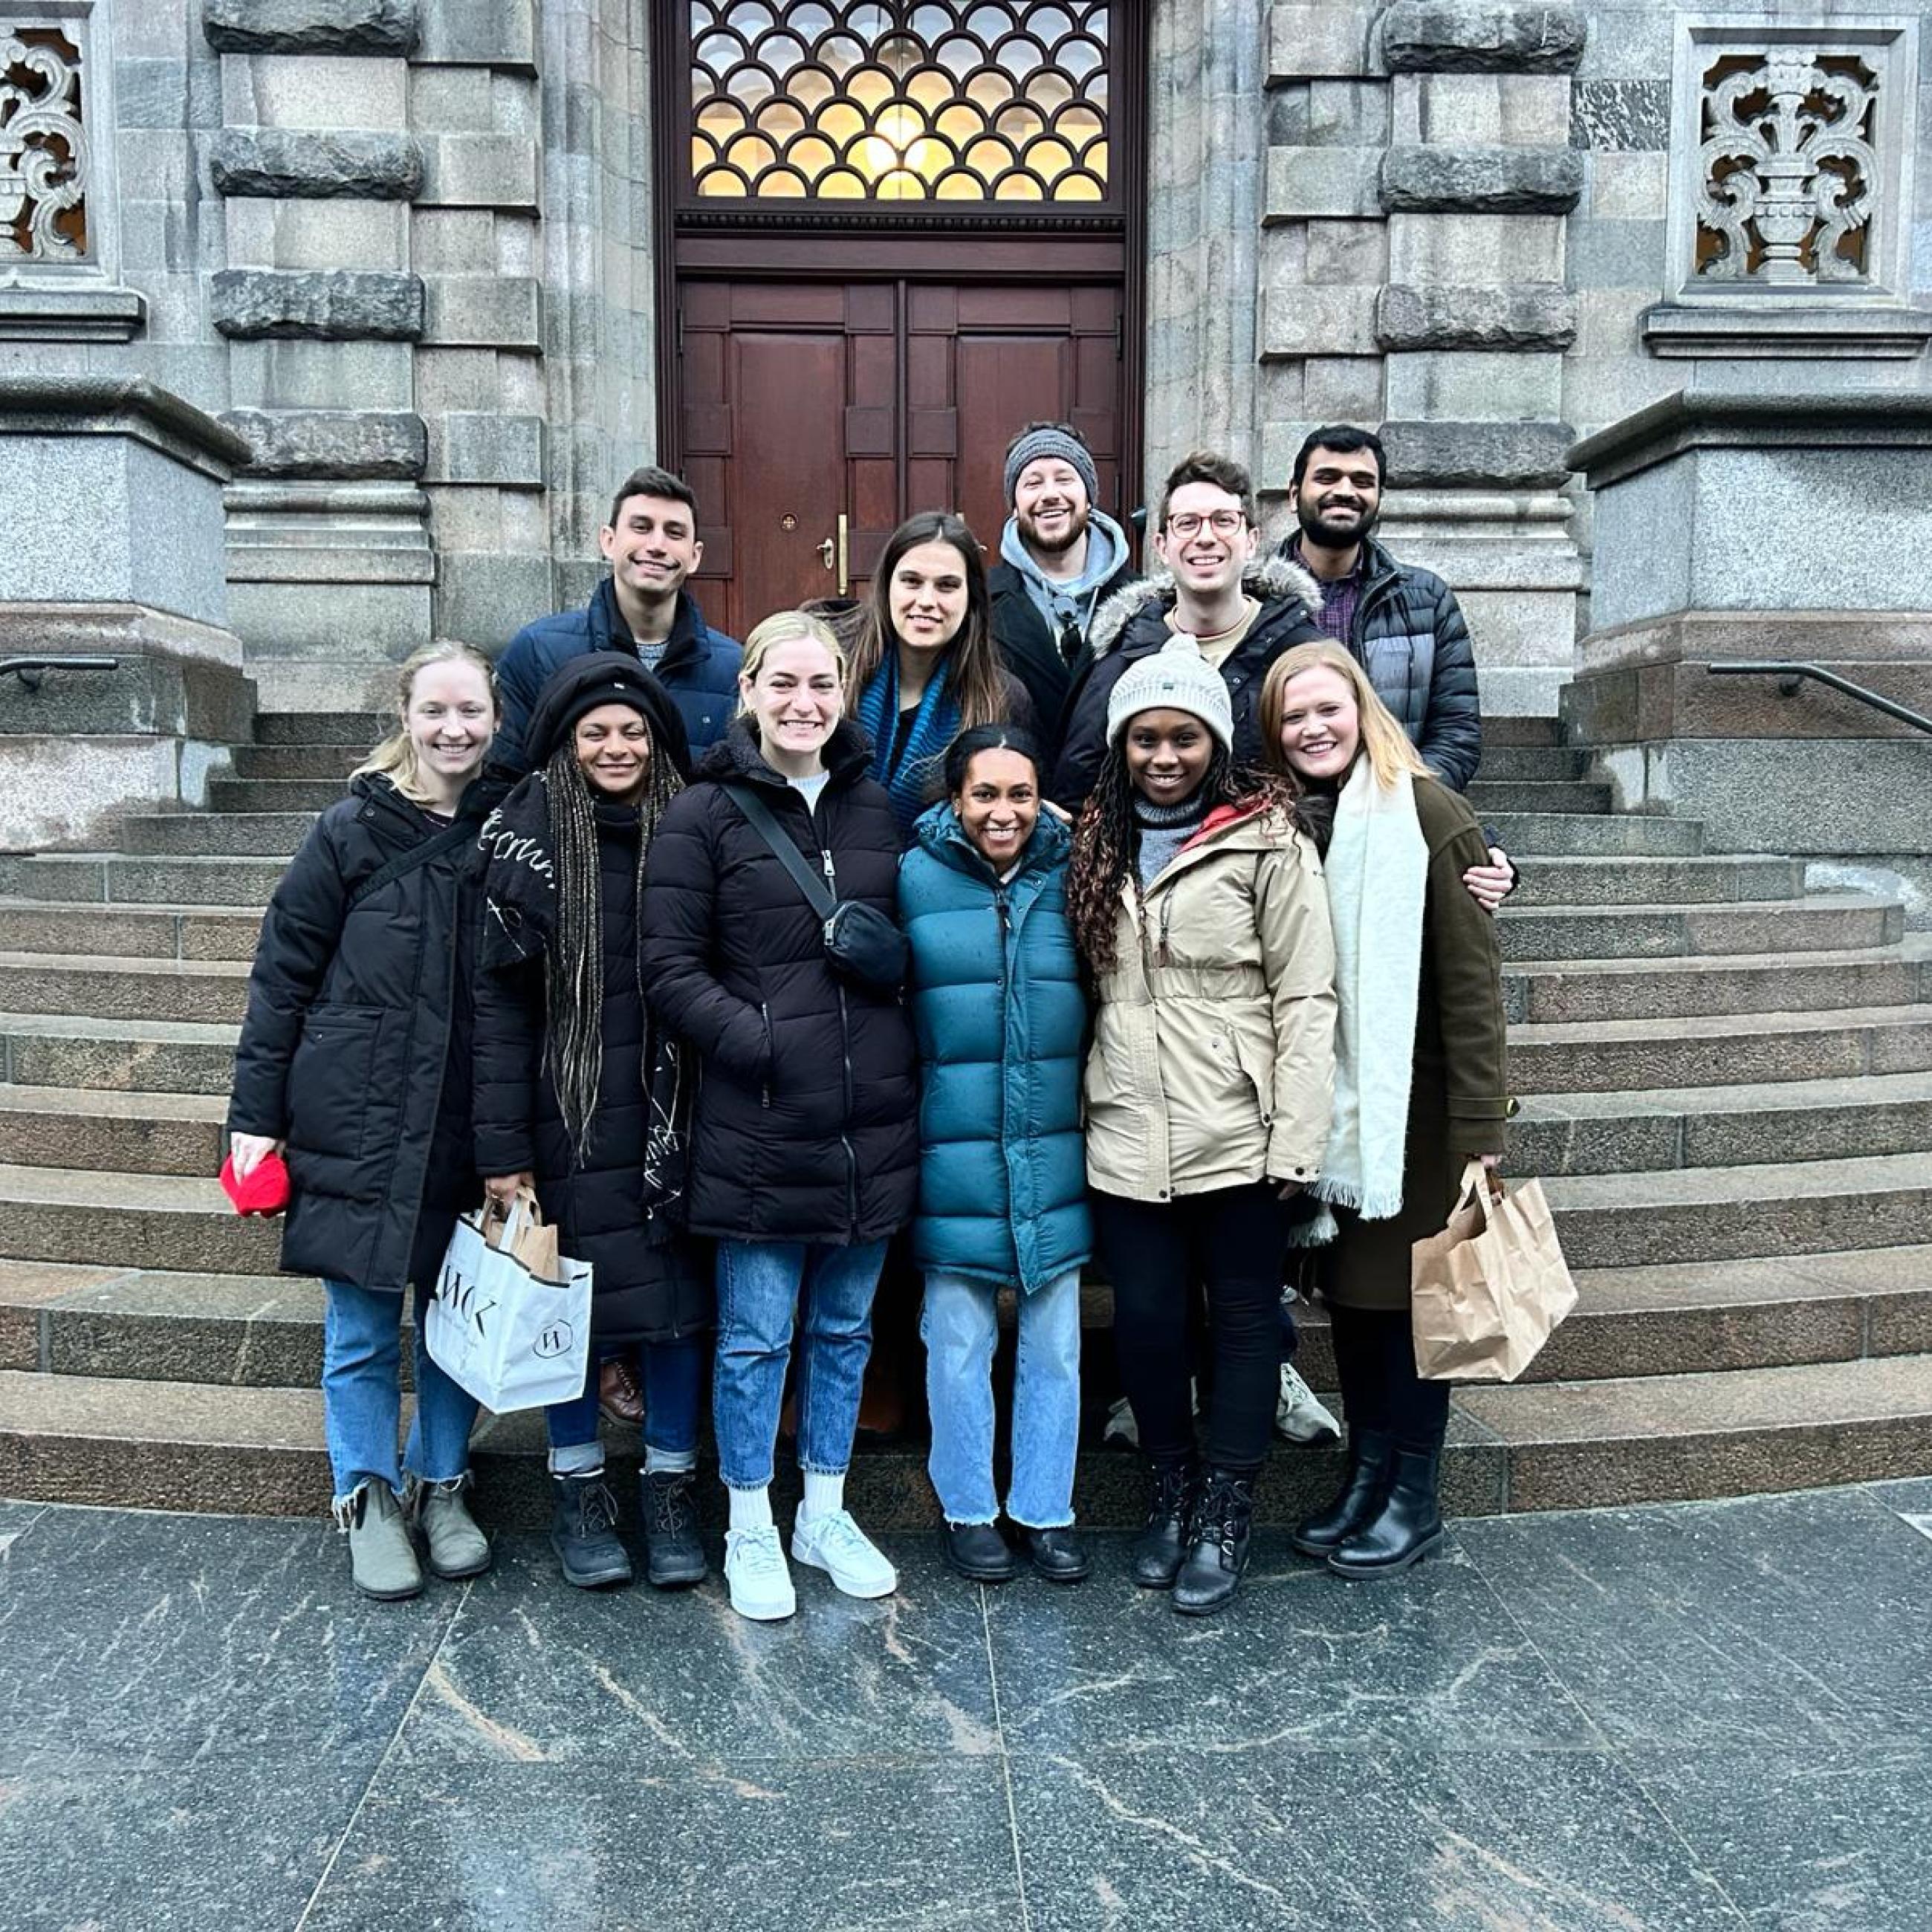 SPIA graduate students in Denmark over winter break